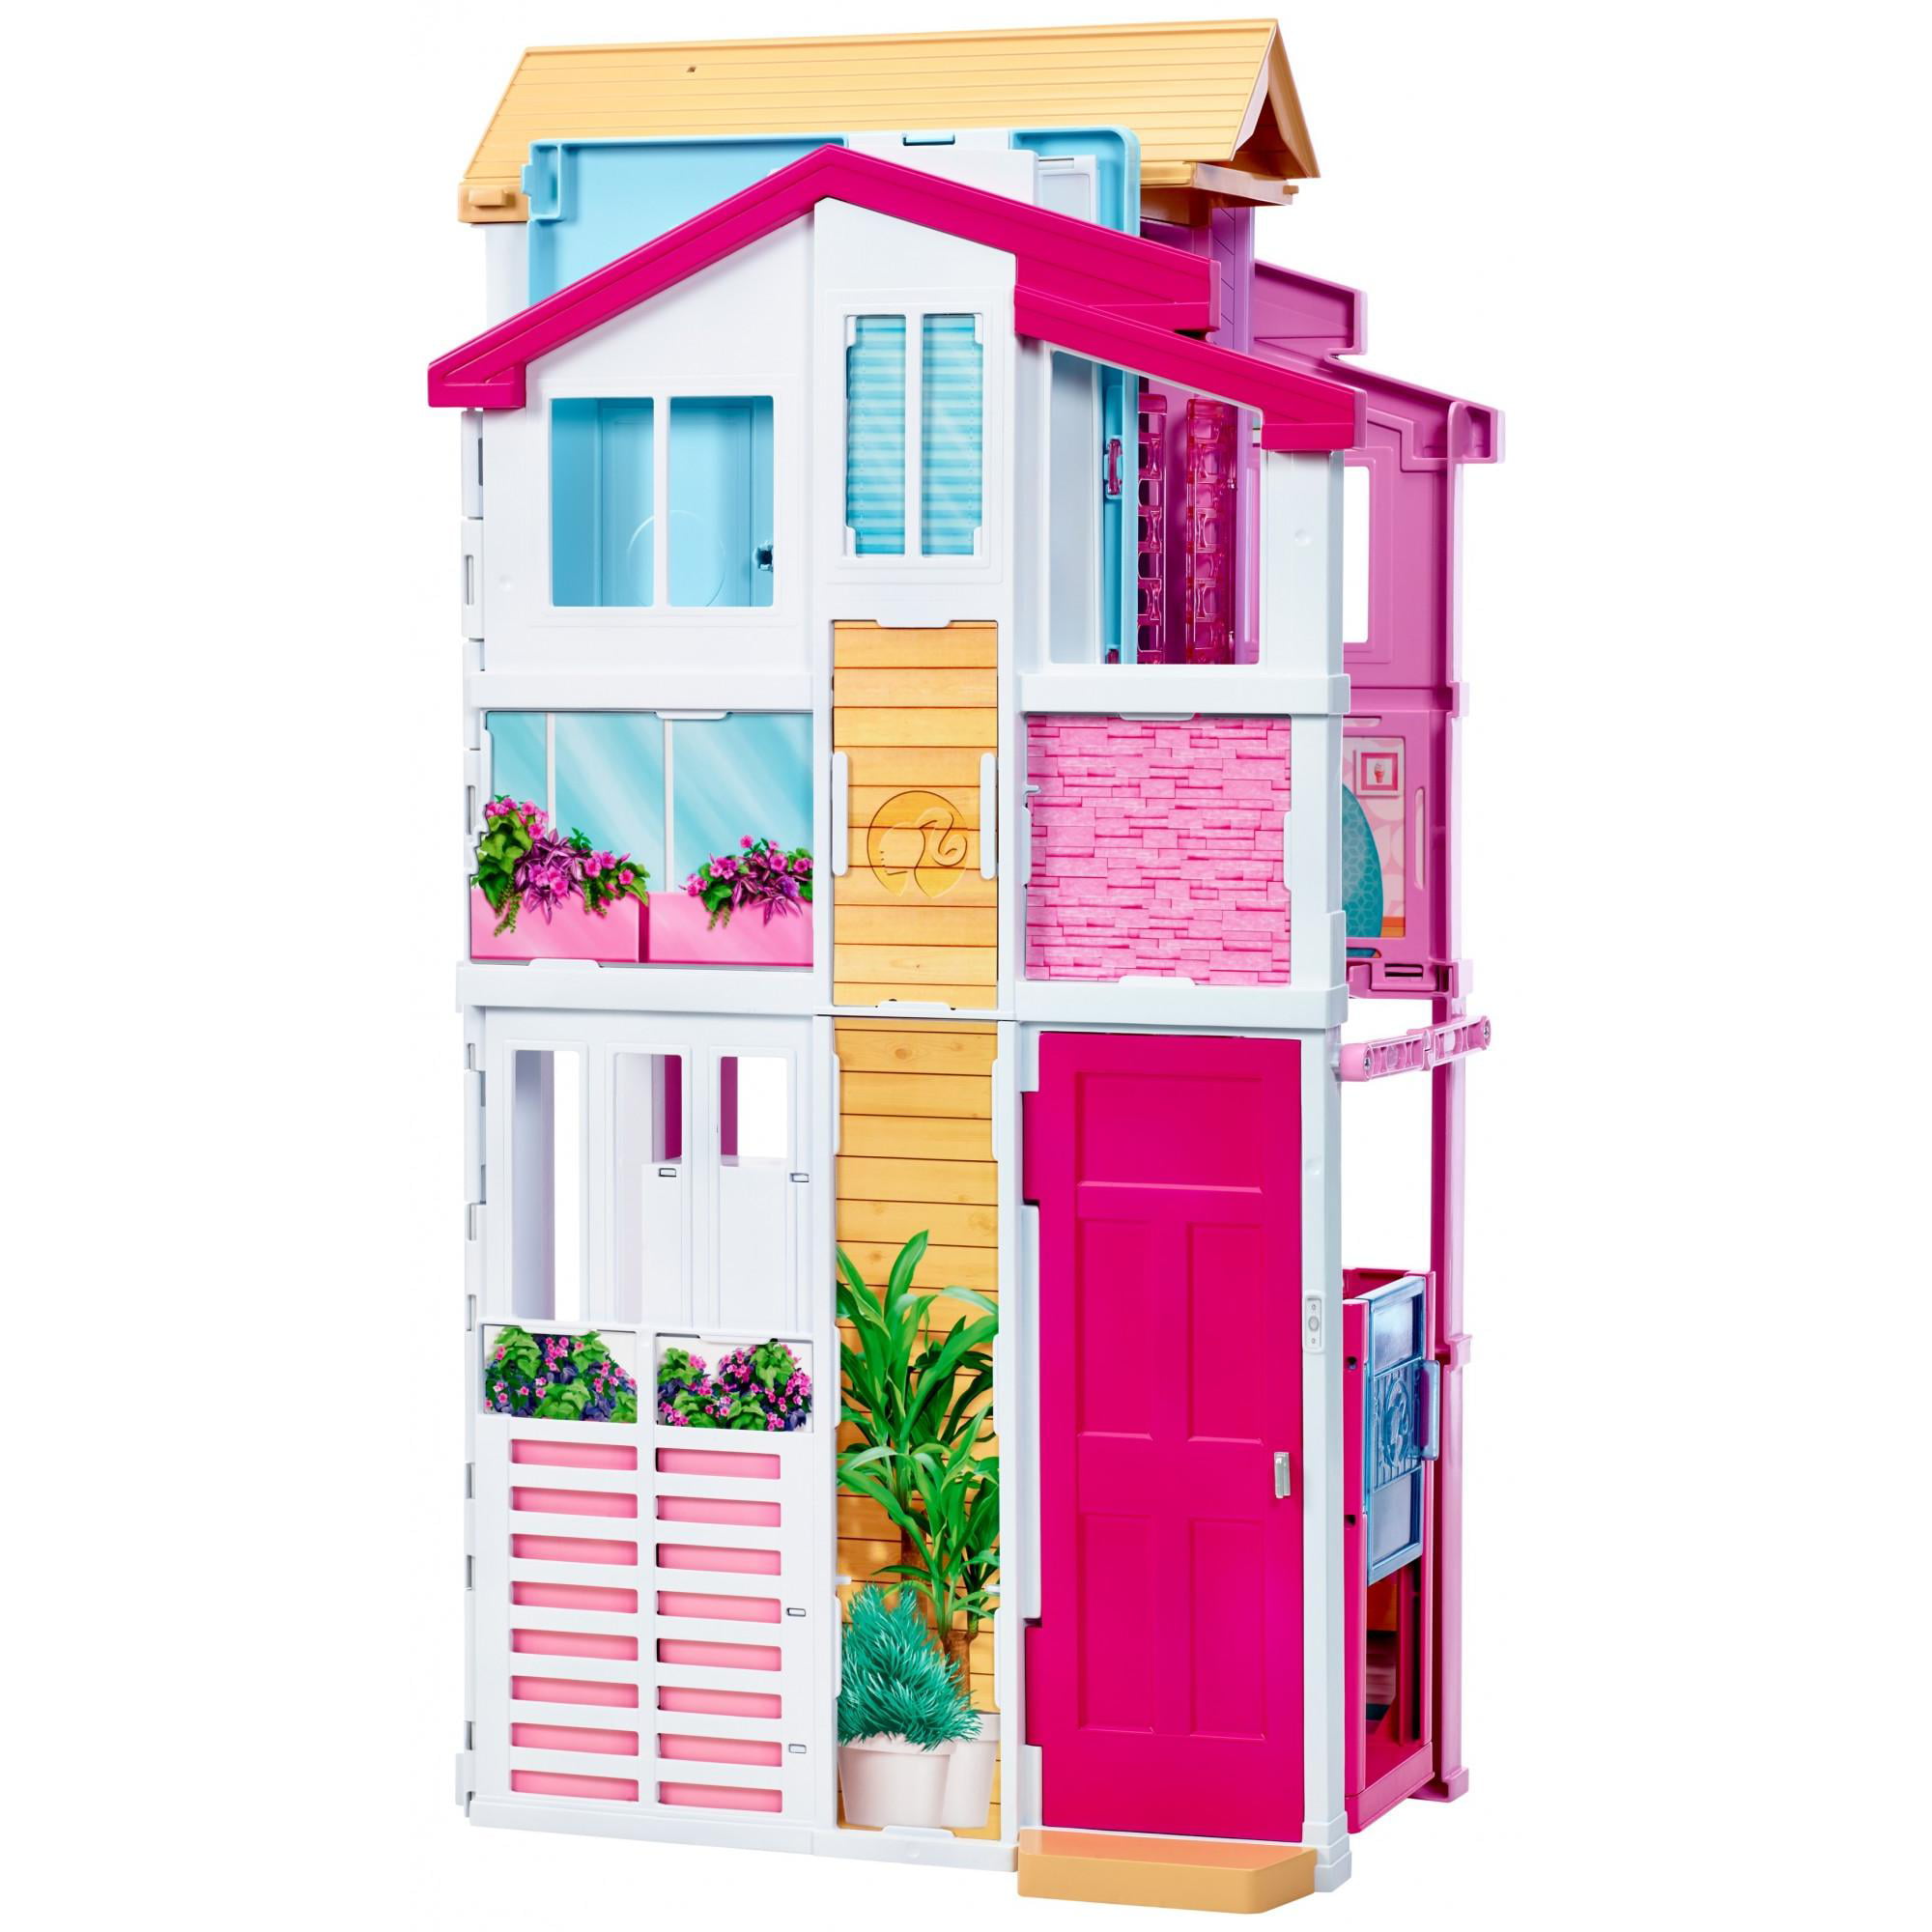 3 storey barbie house